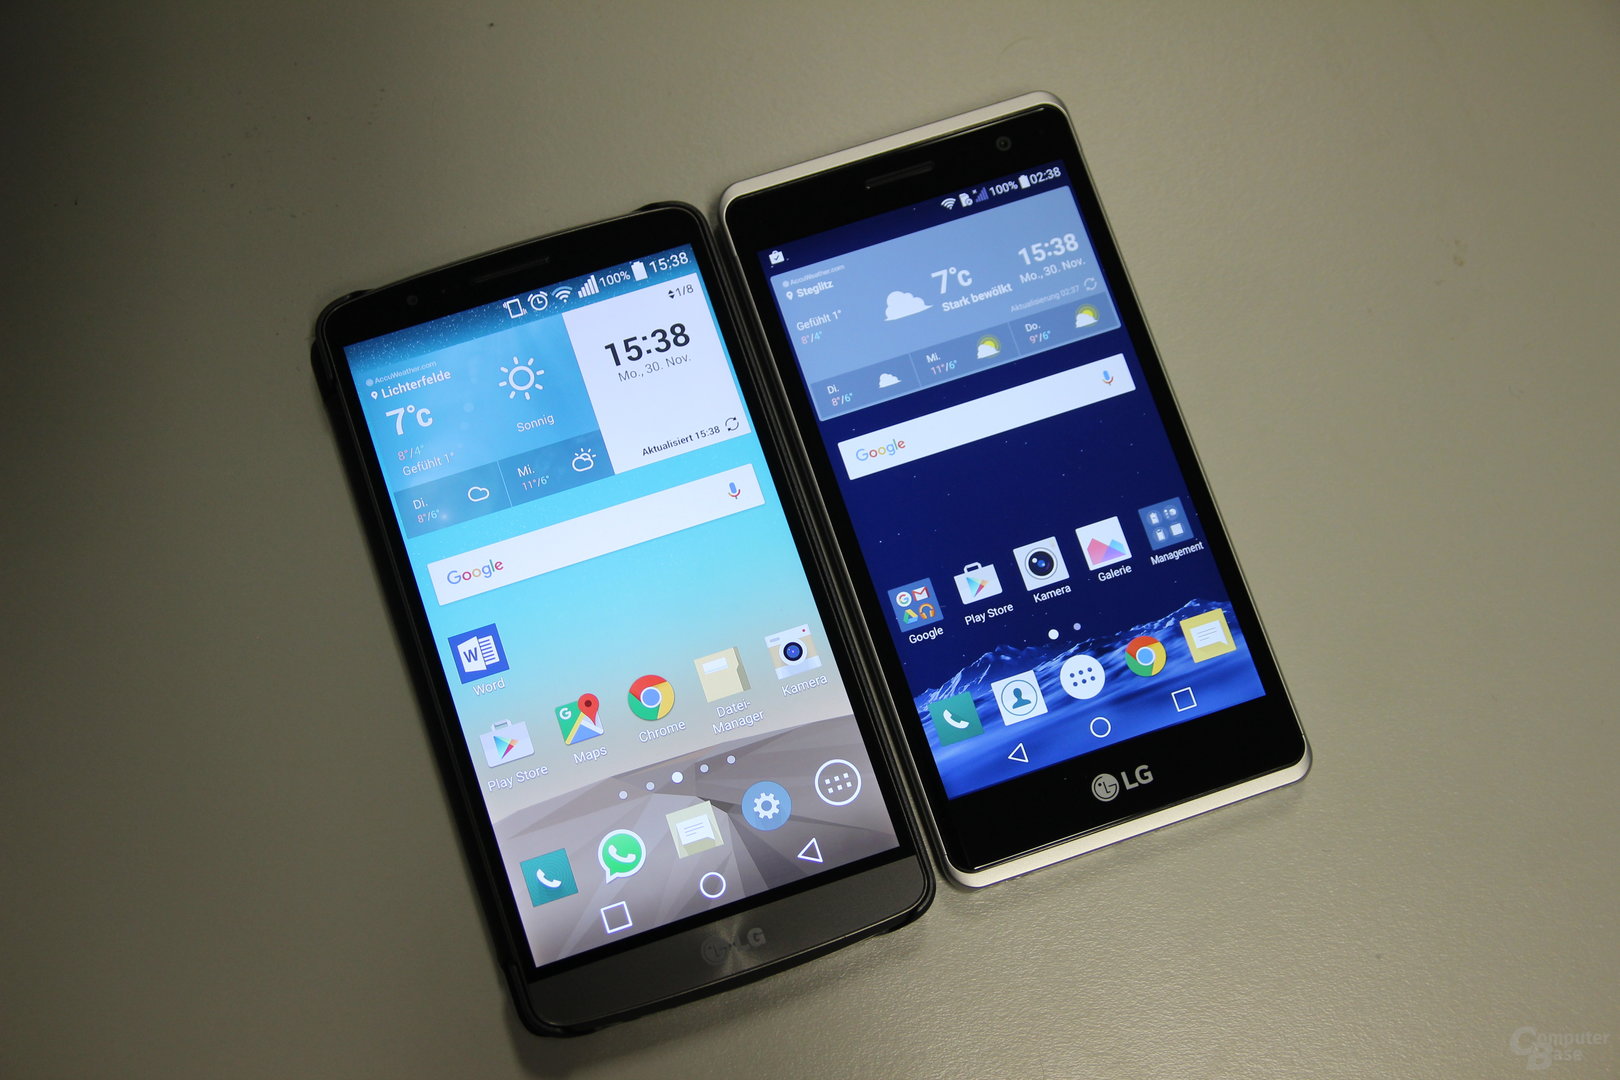 LG G3 vs. LG Class